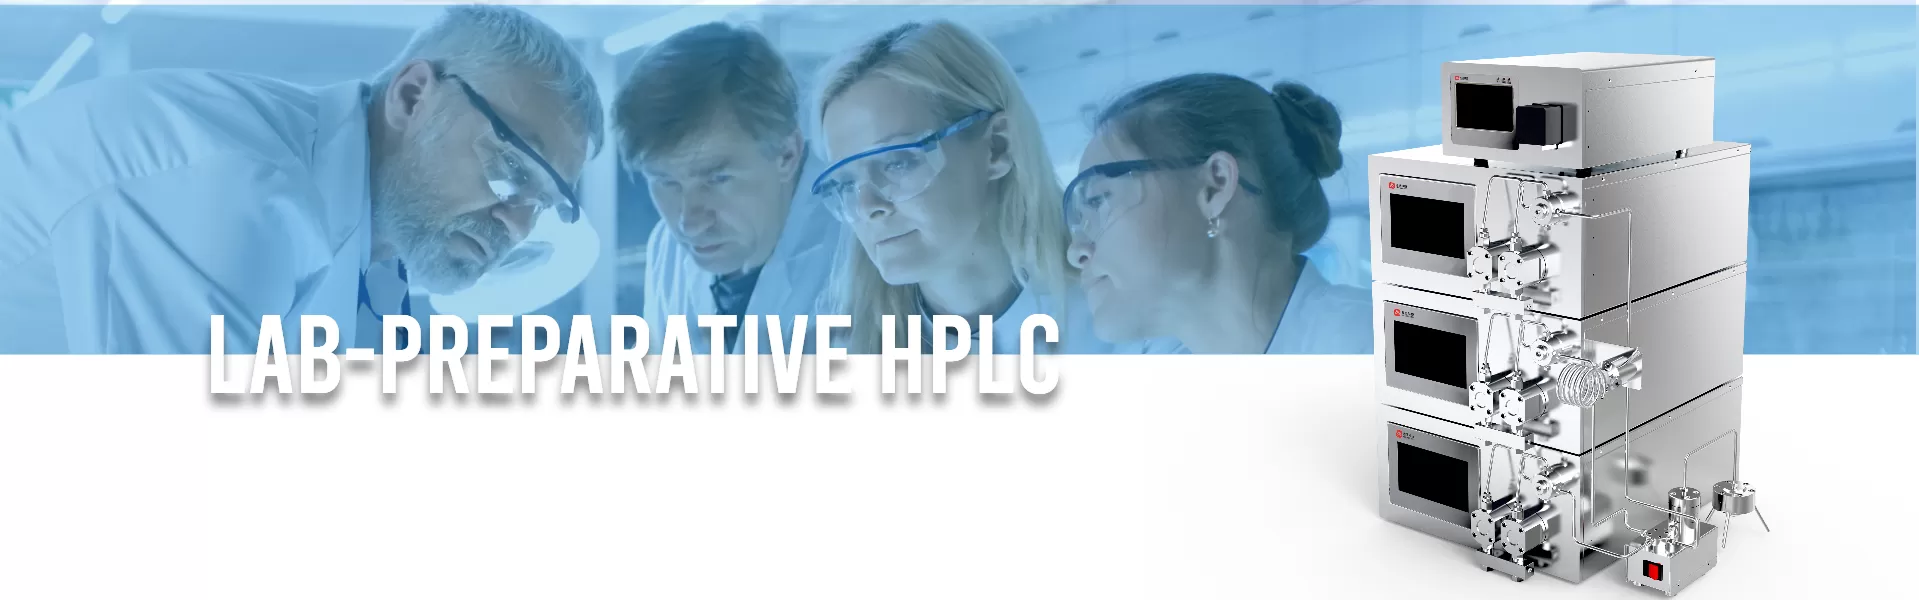 Lab-Preparative HPLC